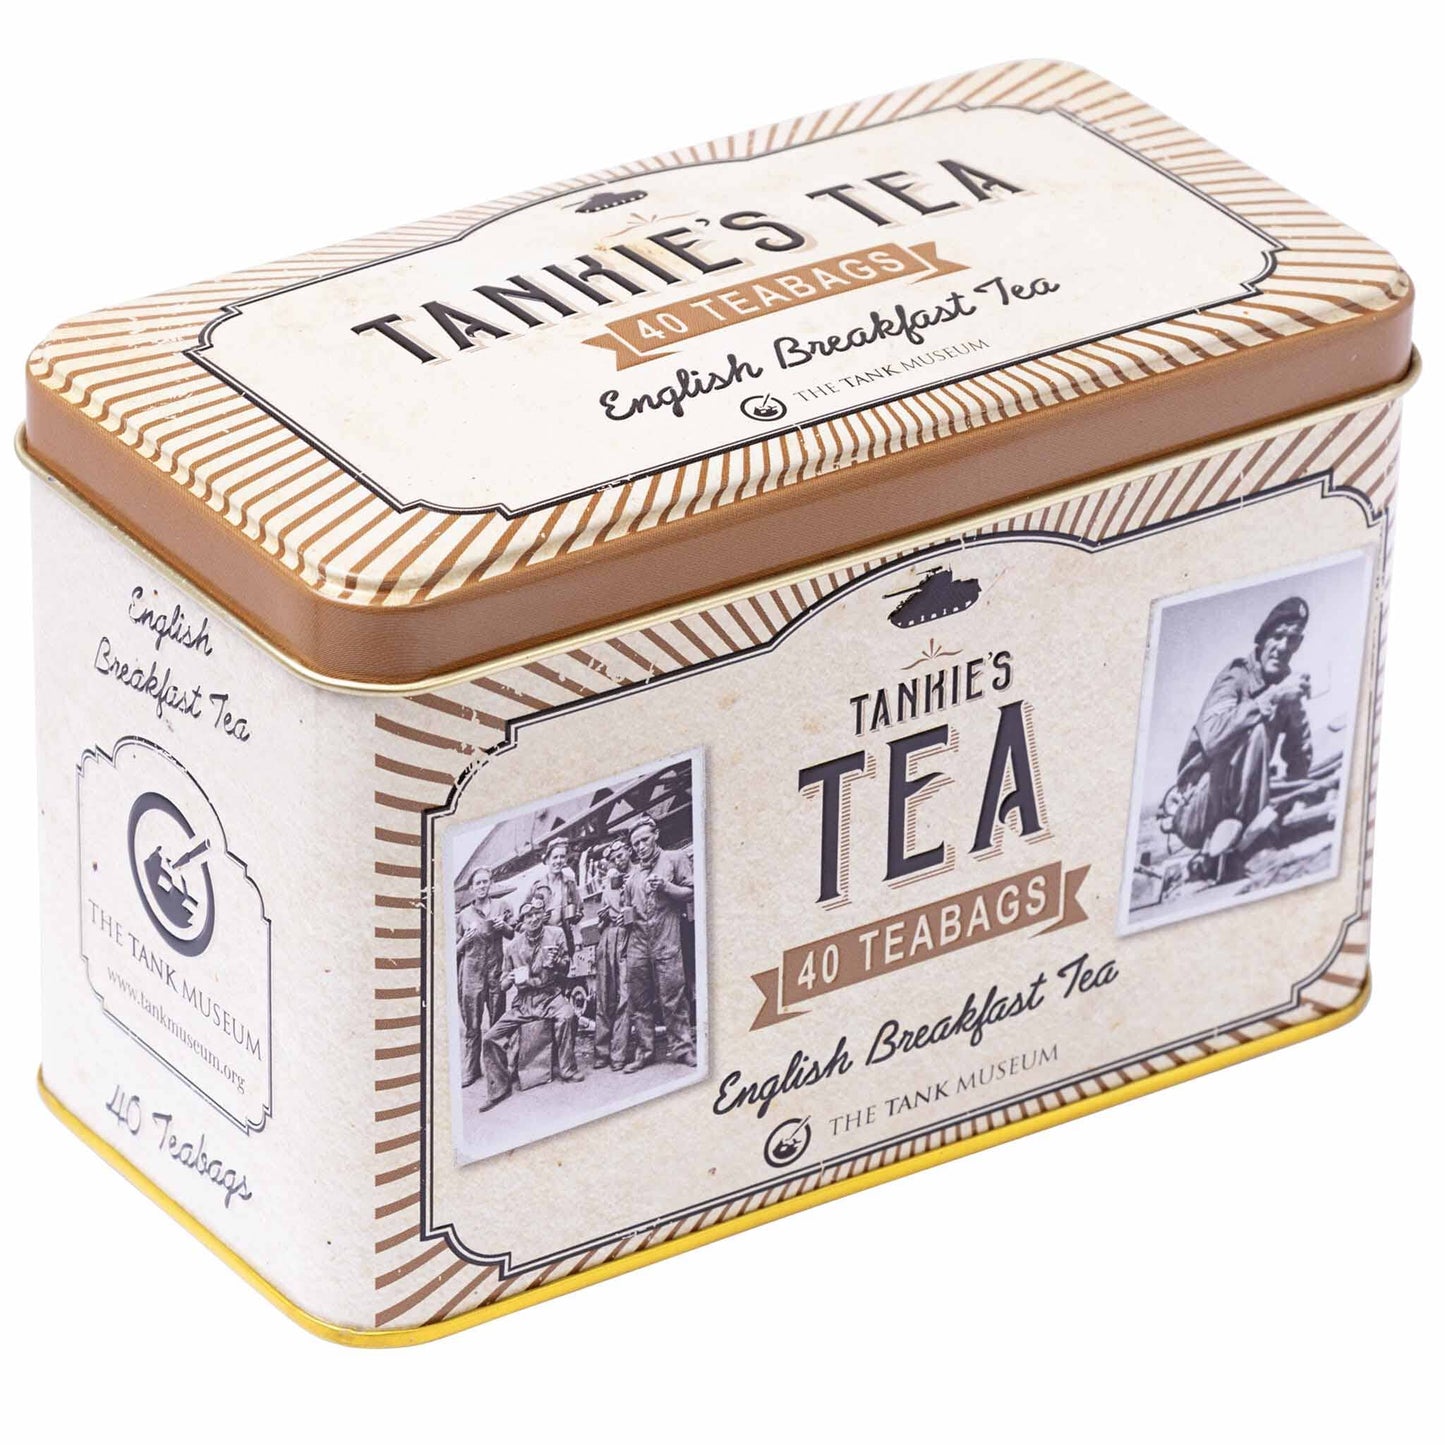 Tankies Tea Tank Museum Classic Tea Tin with 40 English Breakfast Teabags Tea Tins New English Teas 